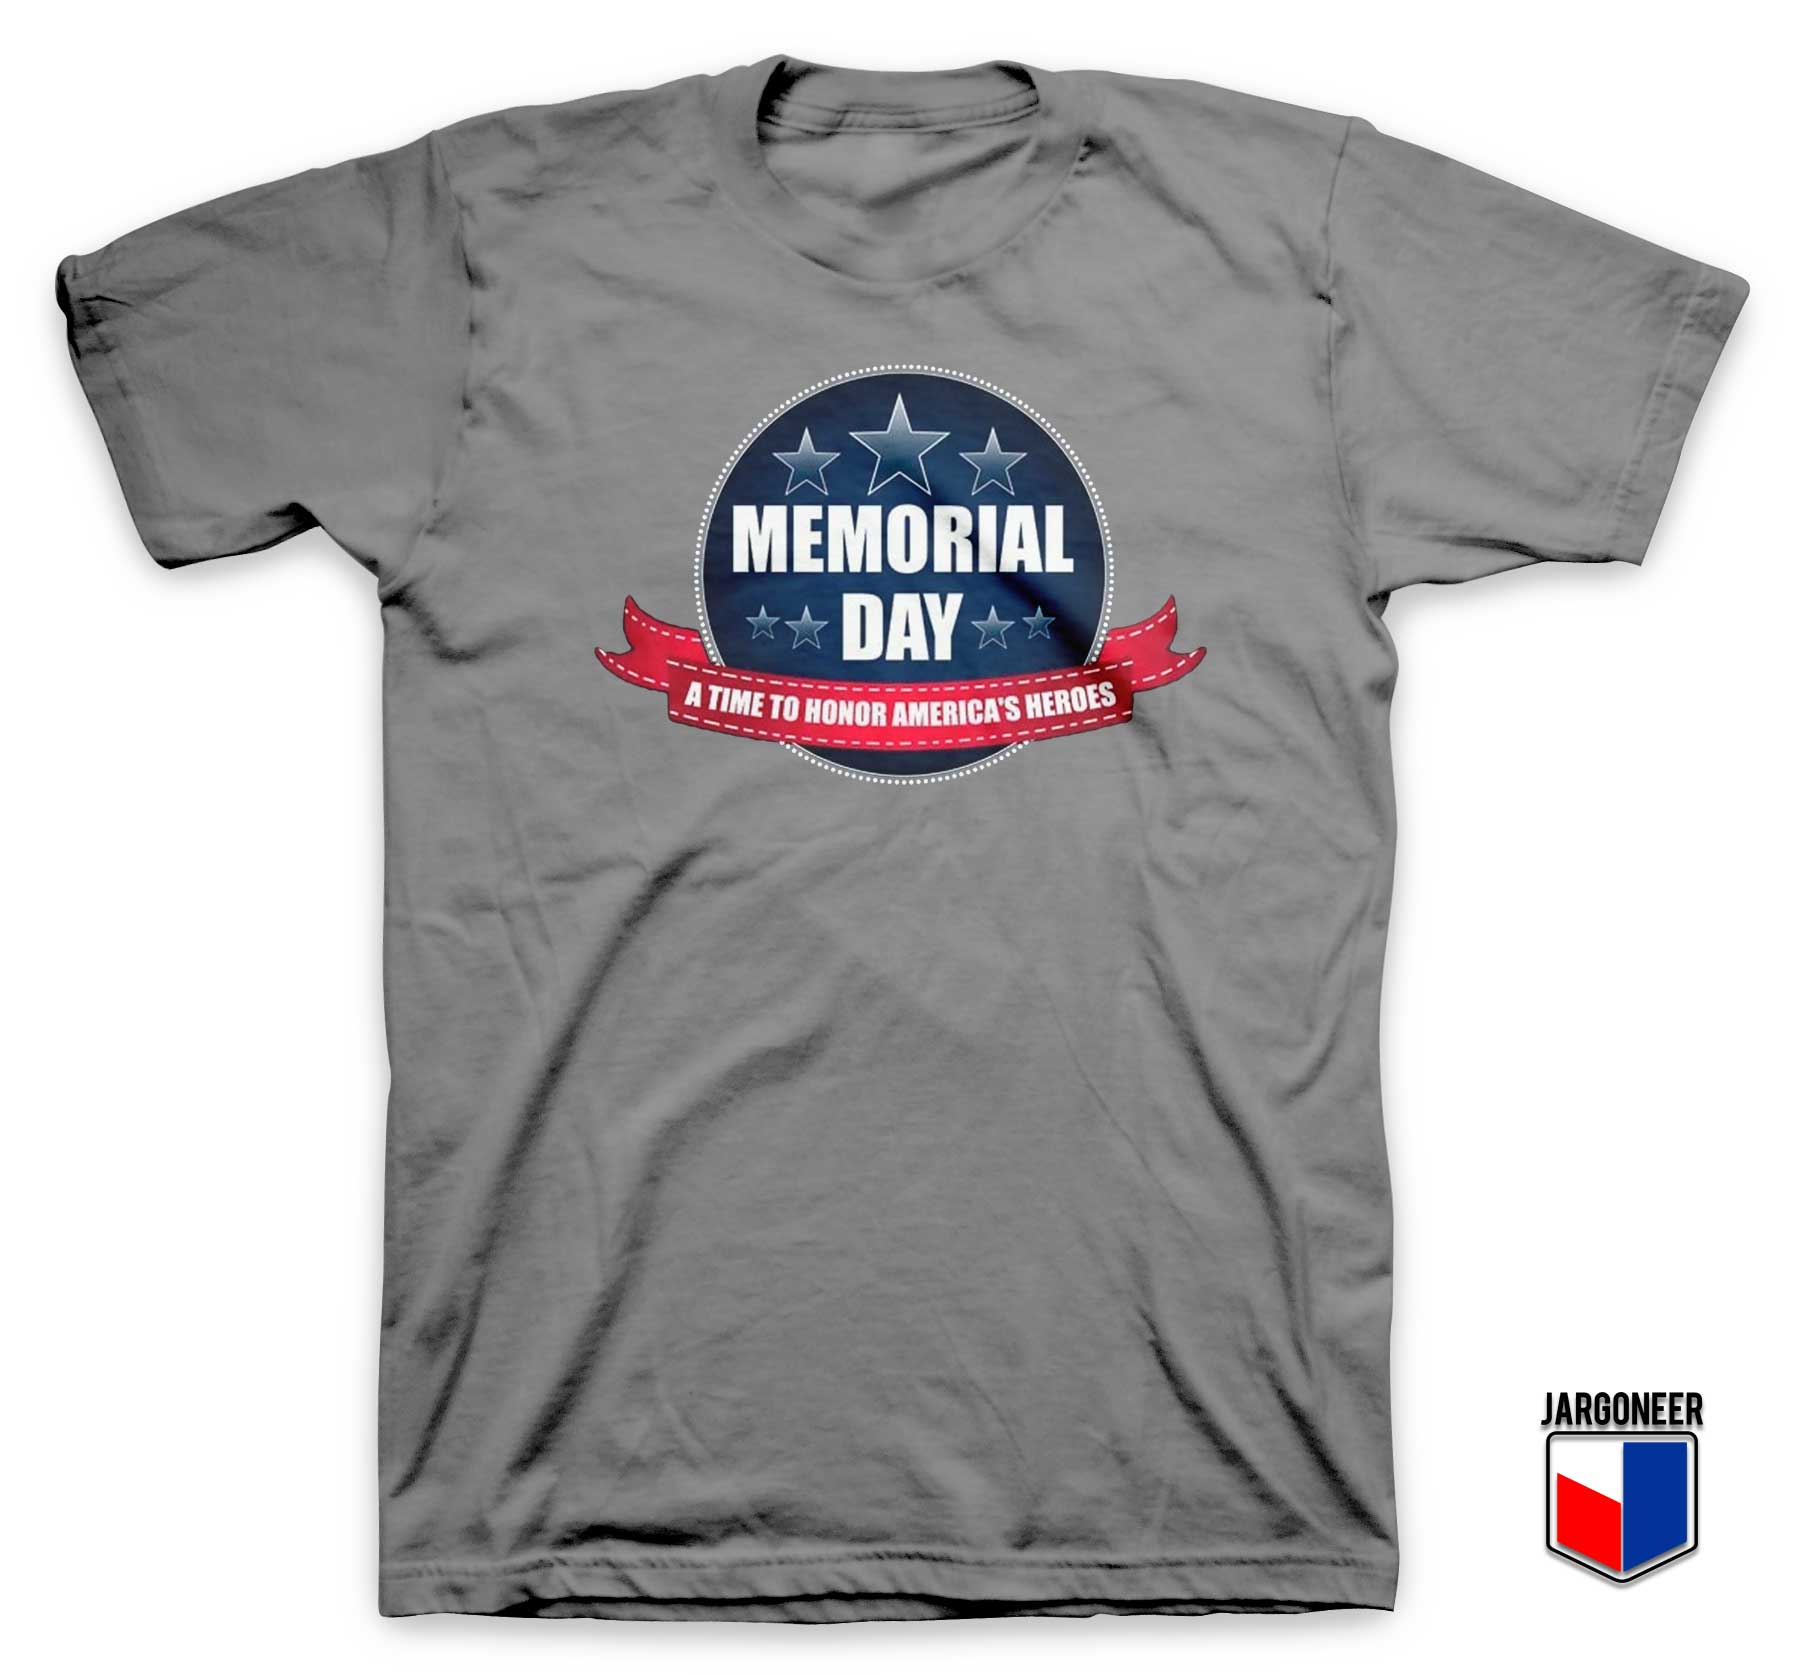 Memorial Day Gray T Shirt - Shop Unique Graphic Cool Shirt Designs